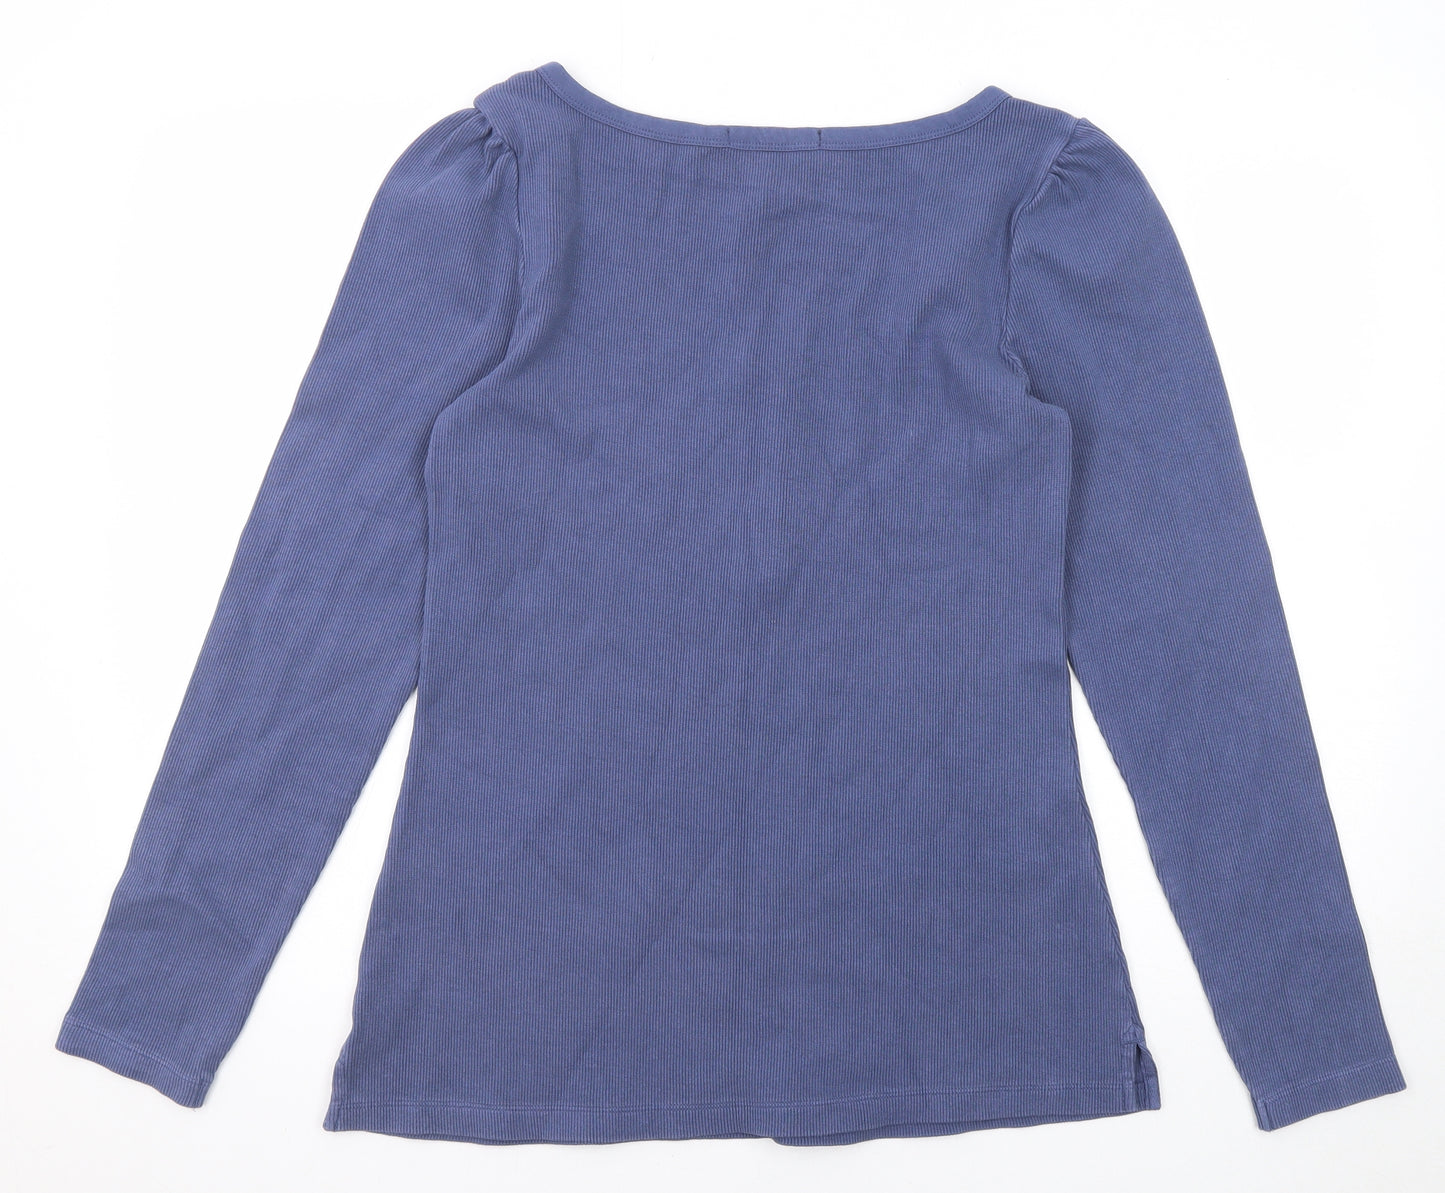 NEXT Womens Blue Cotton Basic T-Shirt Size 14 Scoop Neck